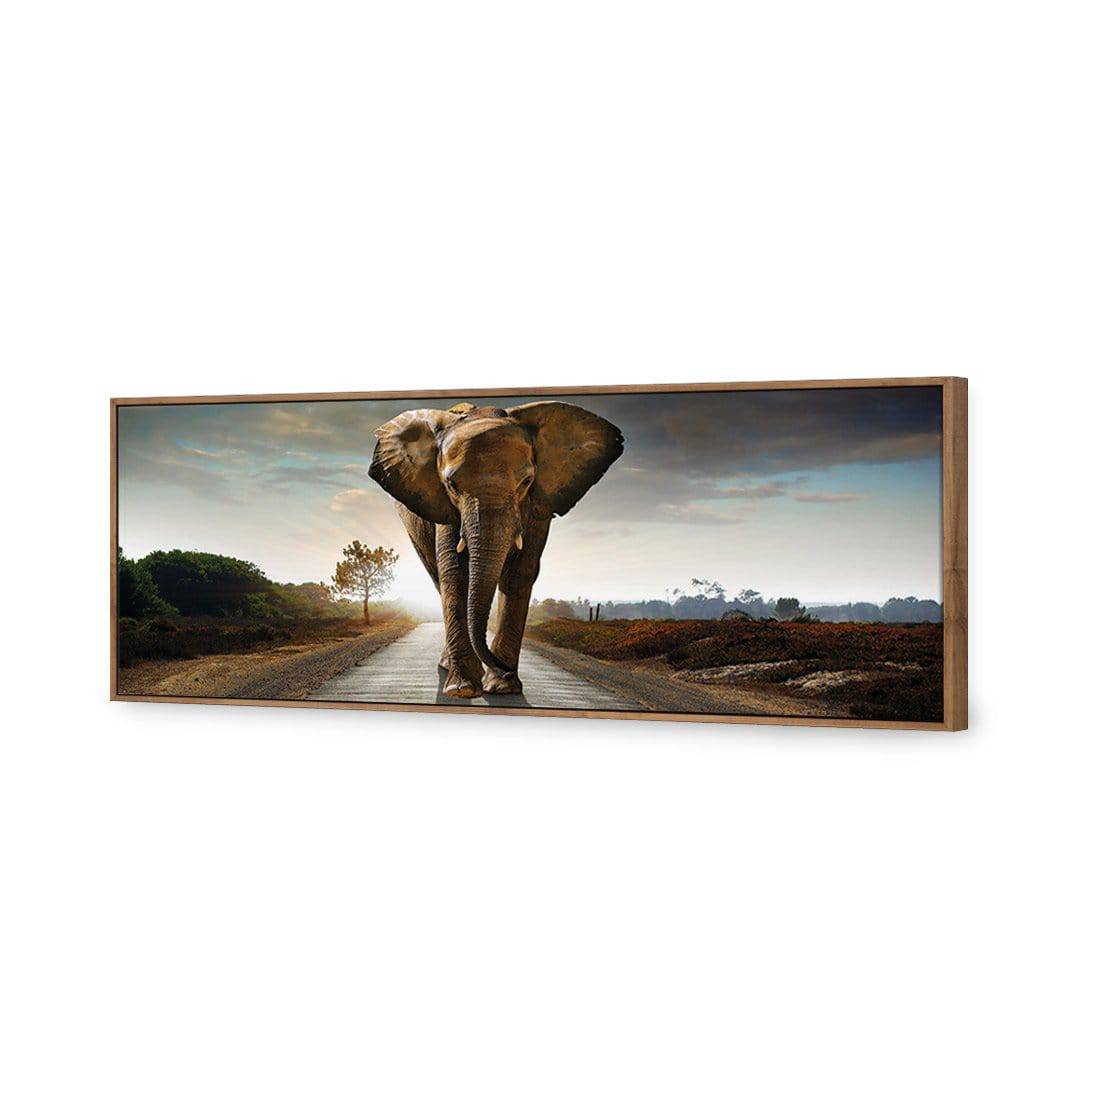 Determined Elephant (Long) Canvas Art-Canvas-Wall Art Designs-60x20cm-Canvas - Natural Frame-Wall Art Designs